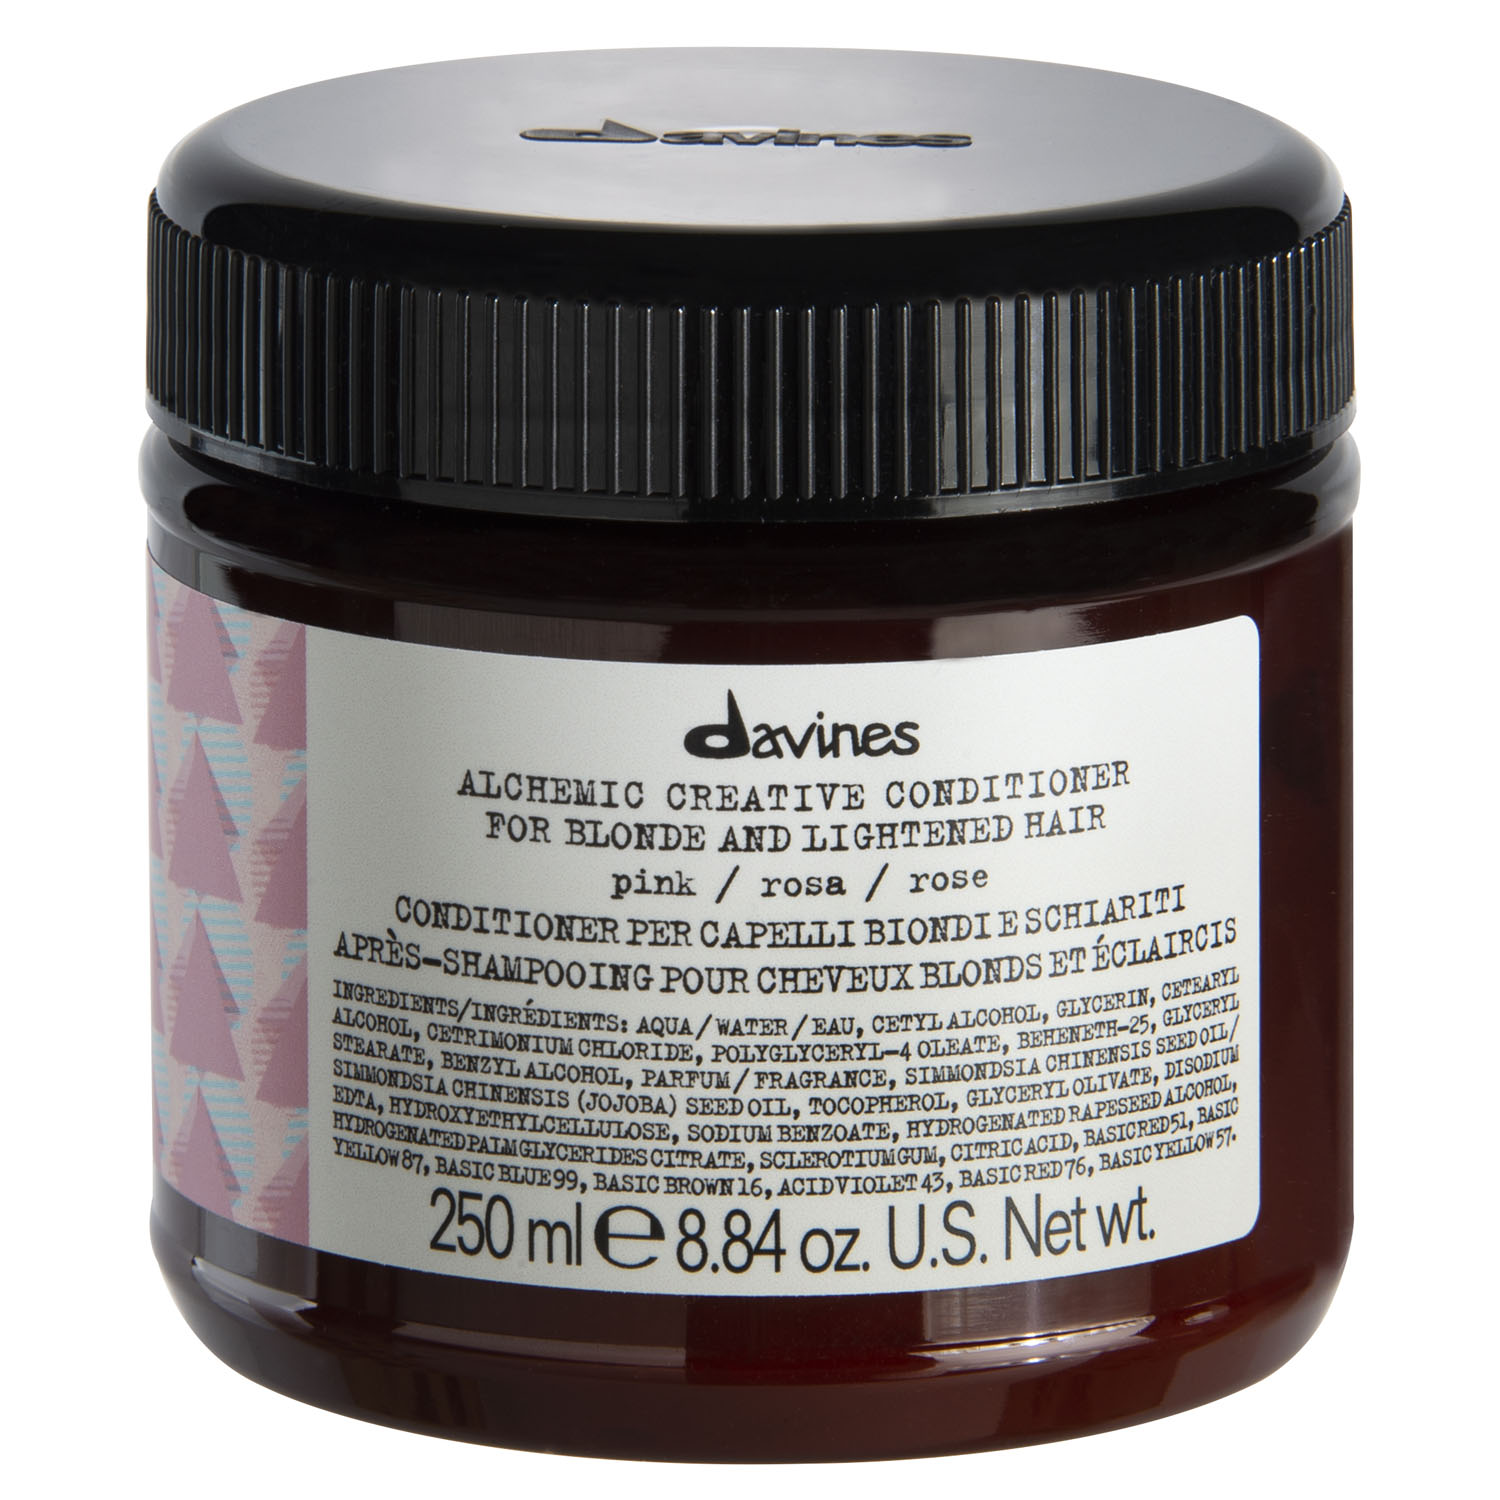 Davines Кондиционер для осветленных и натуральных волос (розовый) Creative Conditioner For Blond And Lightened Hair Pink, 250 мл (Davines, Alchemic)